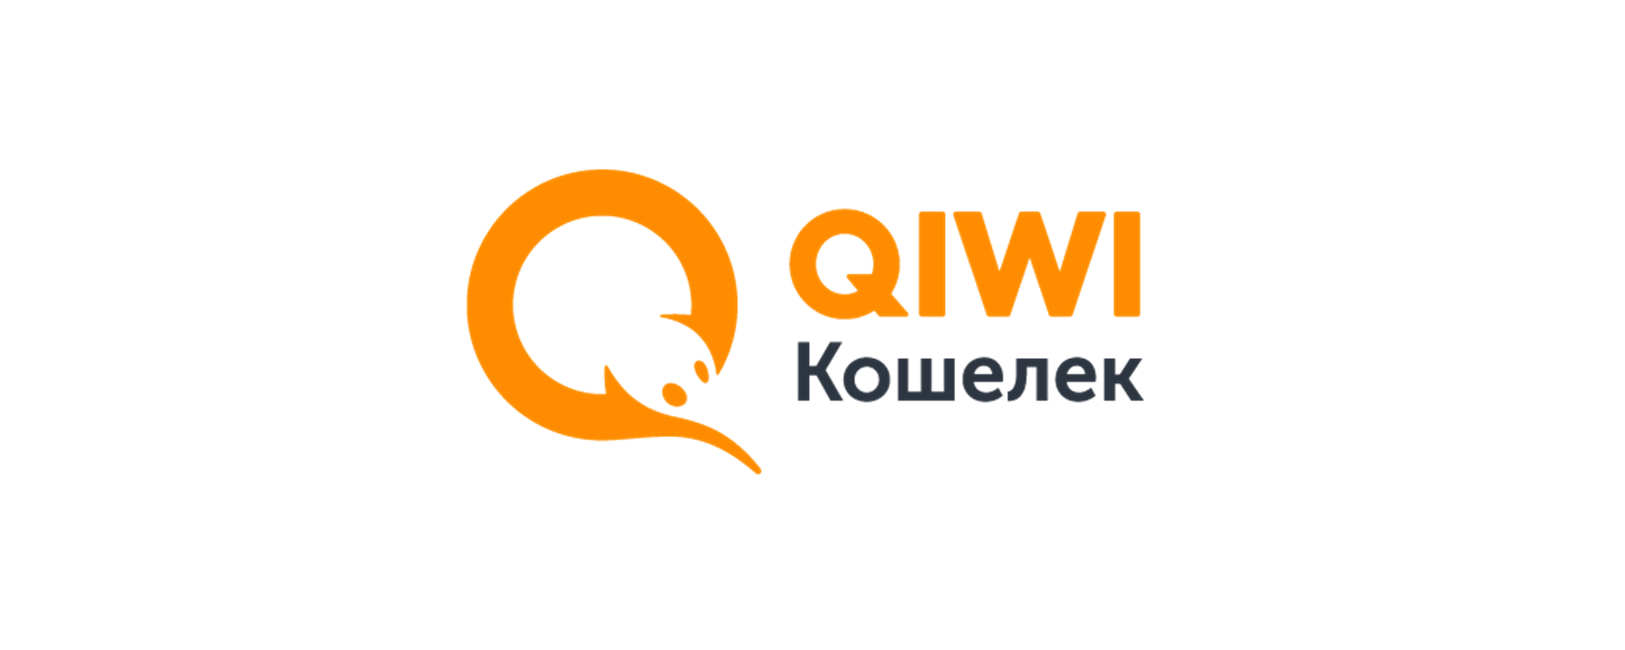 Система qiwi кошелька. QIWI кошелек. Картинки QIWI кошелек. Логотип киви кошелек. Электронная платежная система QIWI.